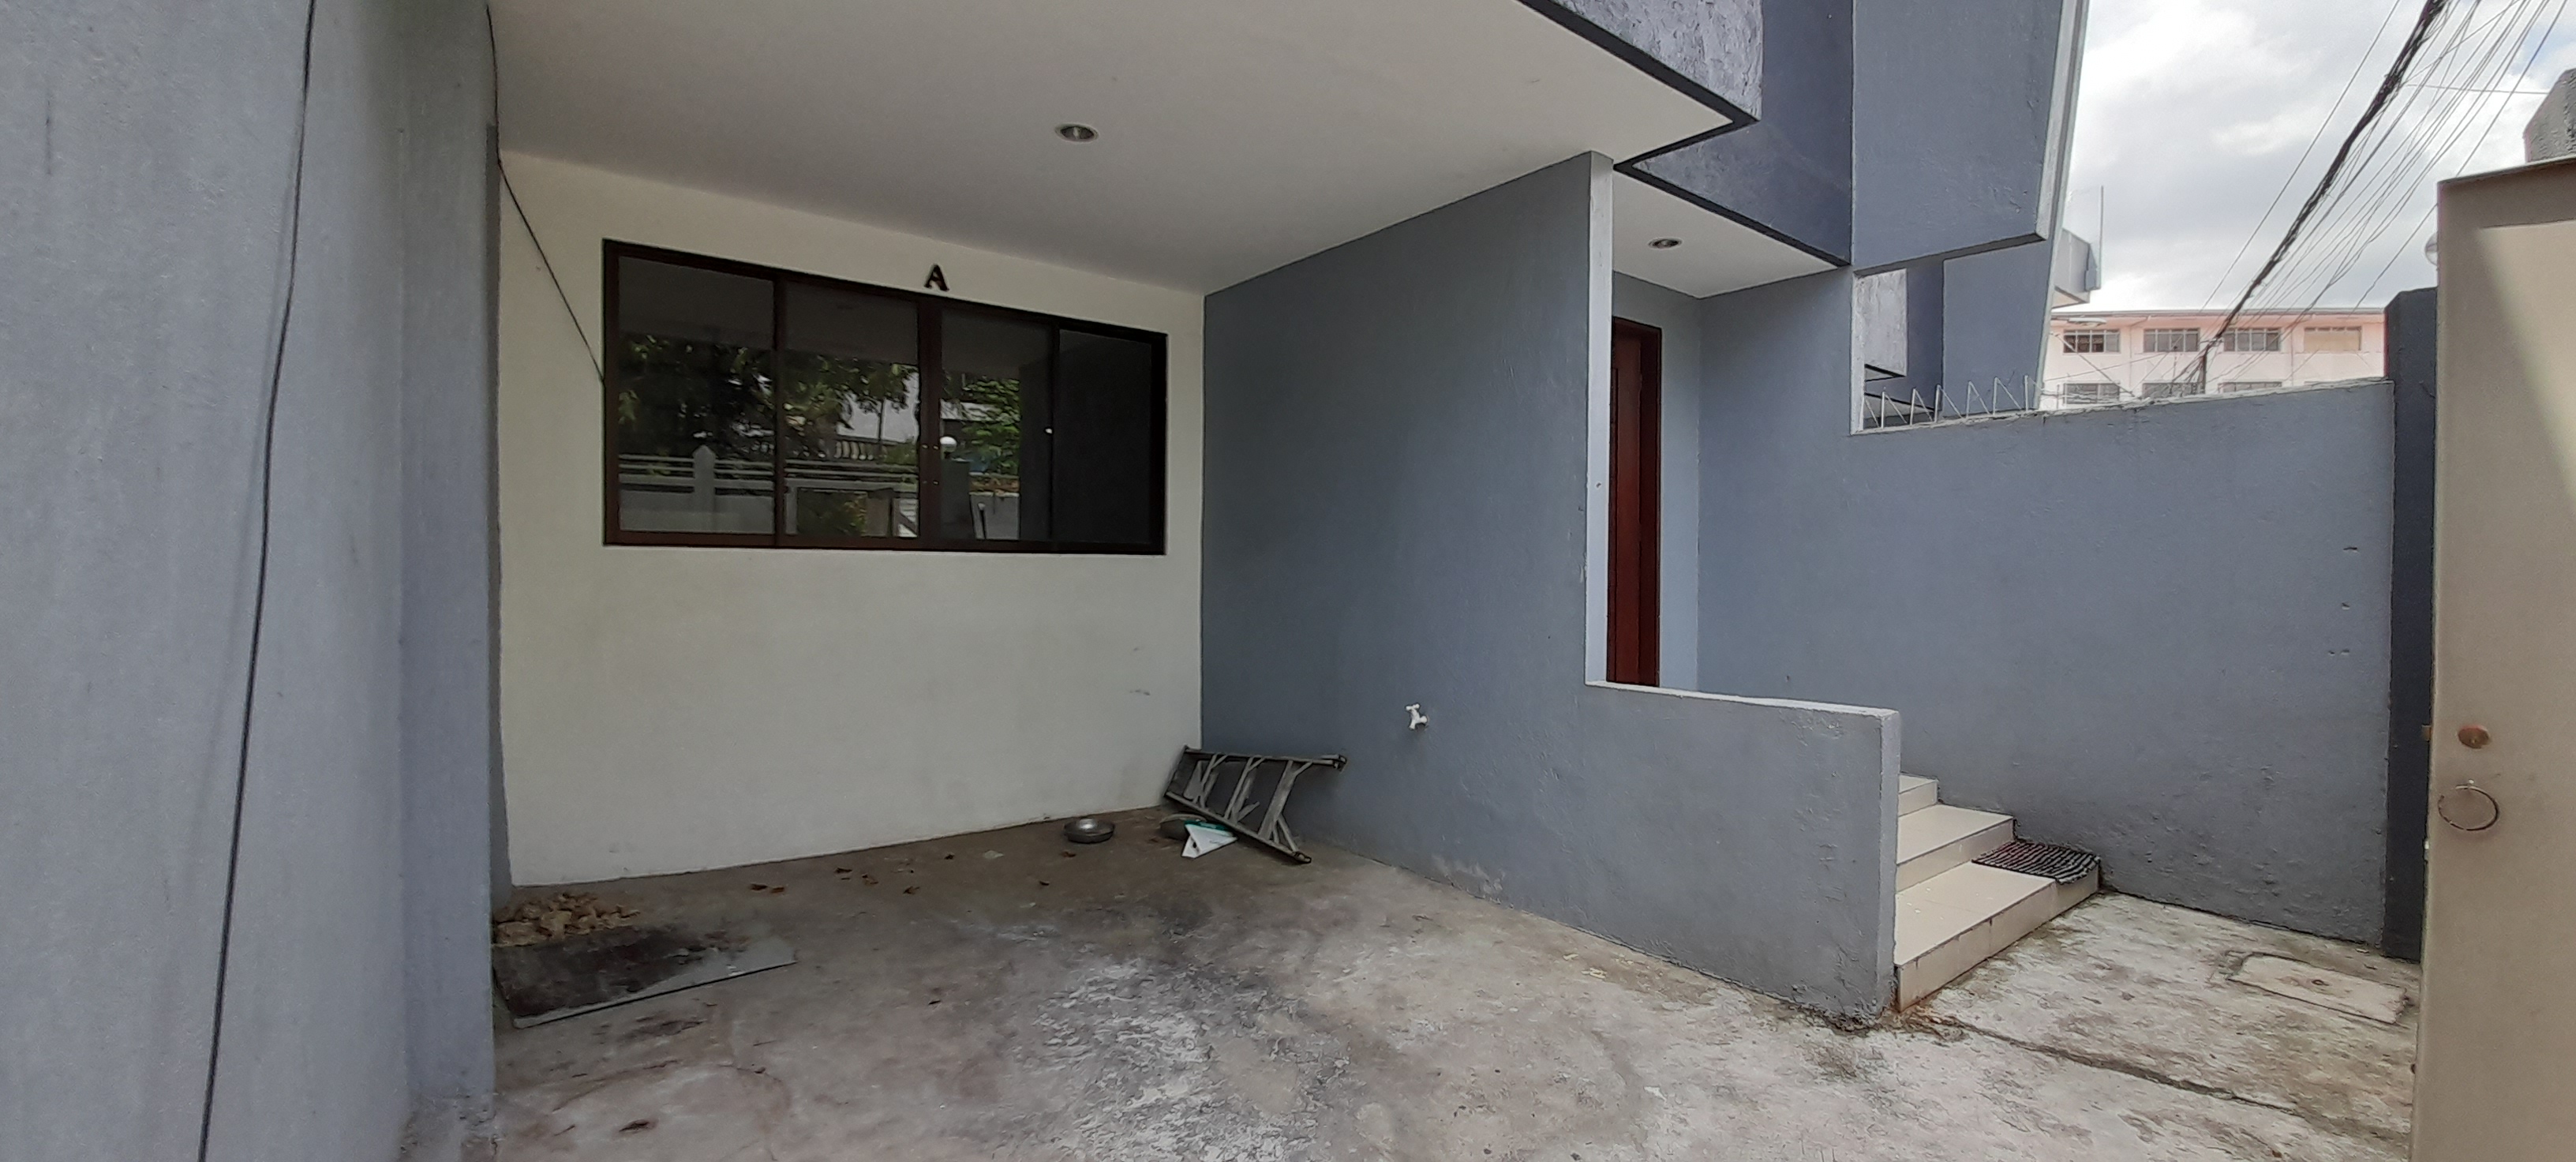 4-bedroom-apartment-in-escario-kamputhaw-cebu-city-at-25k-and-30k